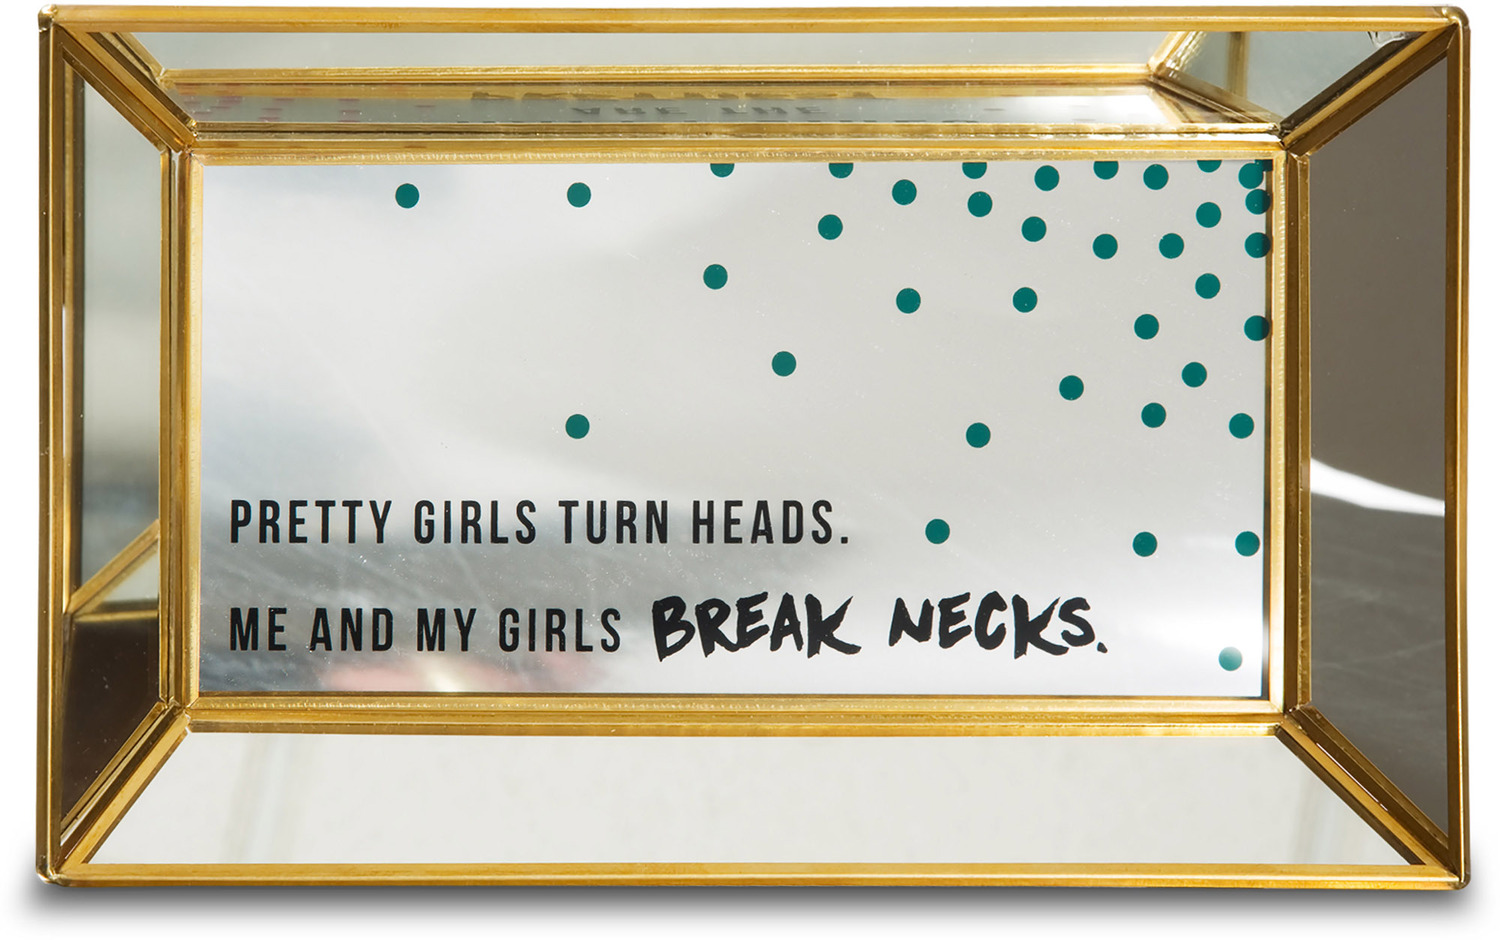 Pretty Girls Turn Heads by Girlfinds - Pretty Girls Turn Heads - 10" x 6" x 1" Mirror Tray